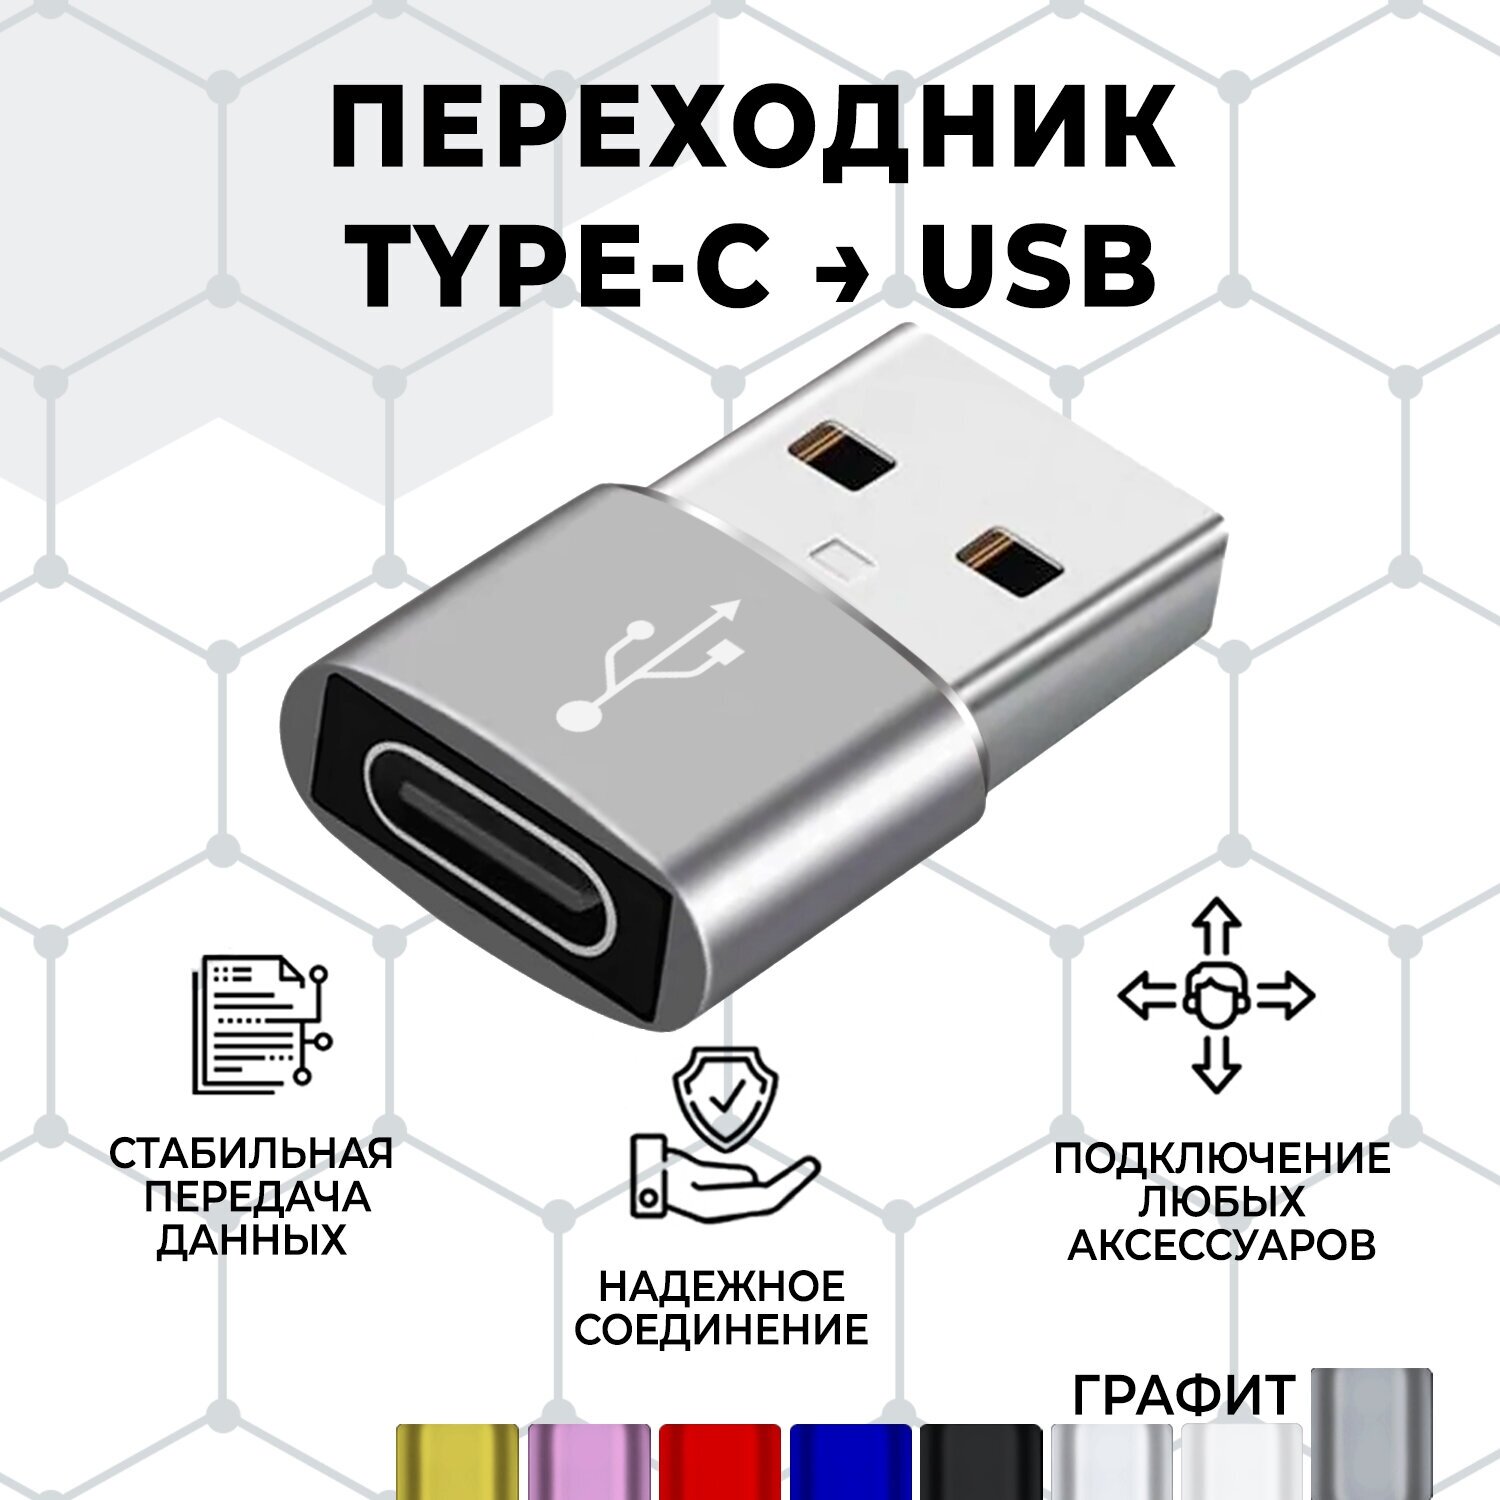 Переходник/адаптер type c на USB , 1 штука. Графит